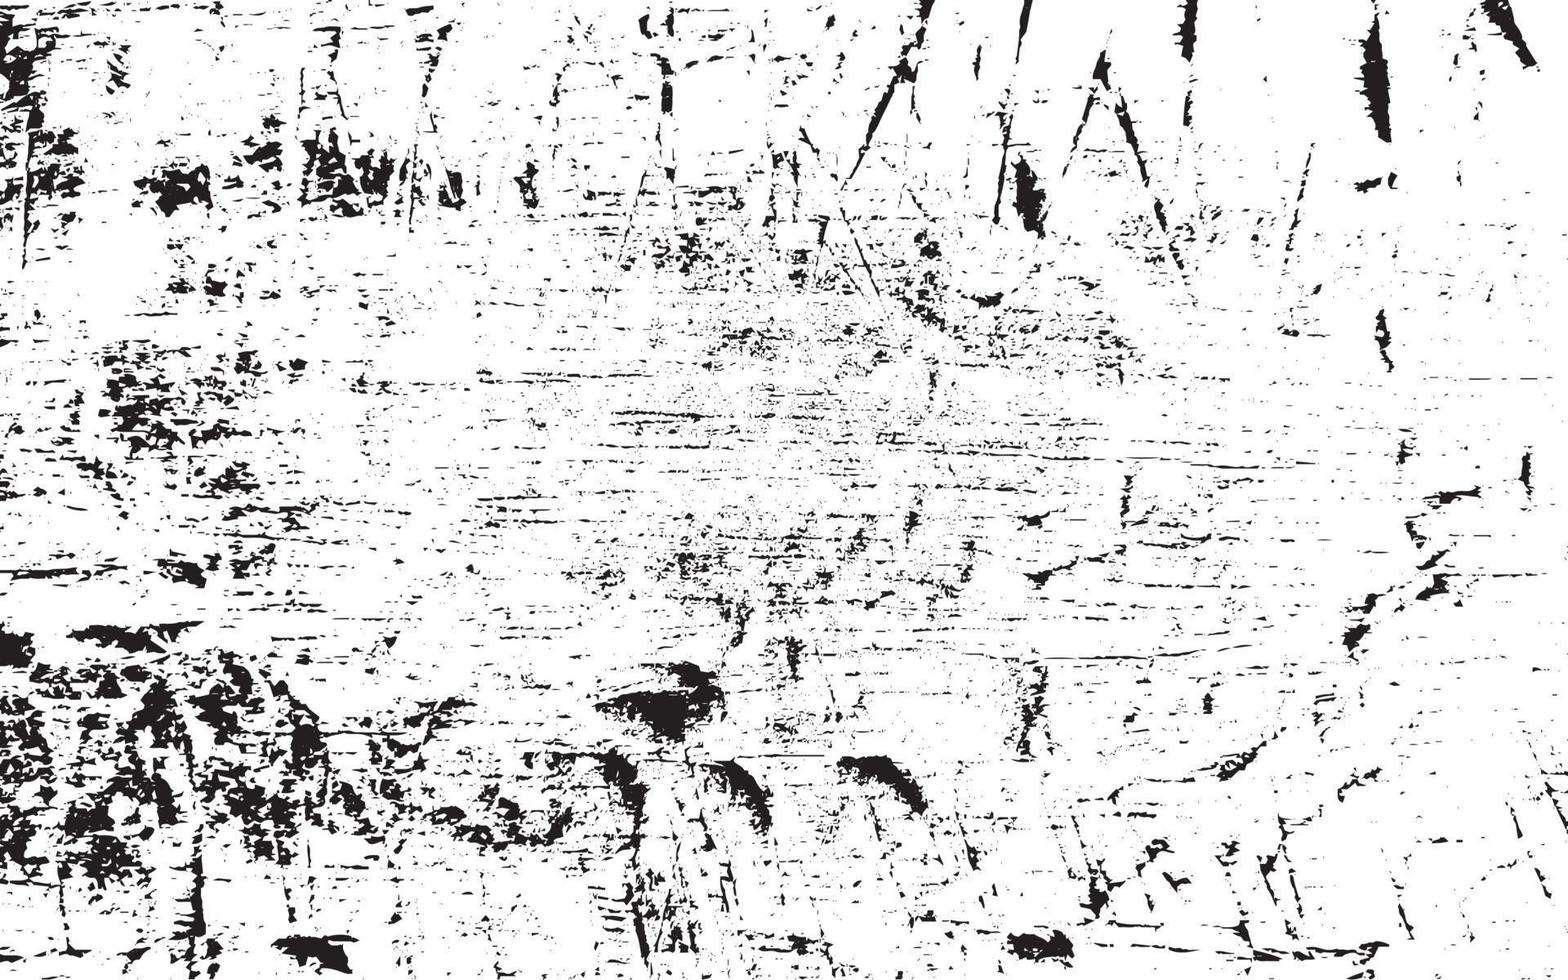 grunge textur effekt. distressed overlay grov texturerad. abstrakt vintage monokrom. svart isolerad på vit bakgrund. grafiskt designelement halvtonsstilkoncept för banner, flygblad, affisch etc vektor